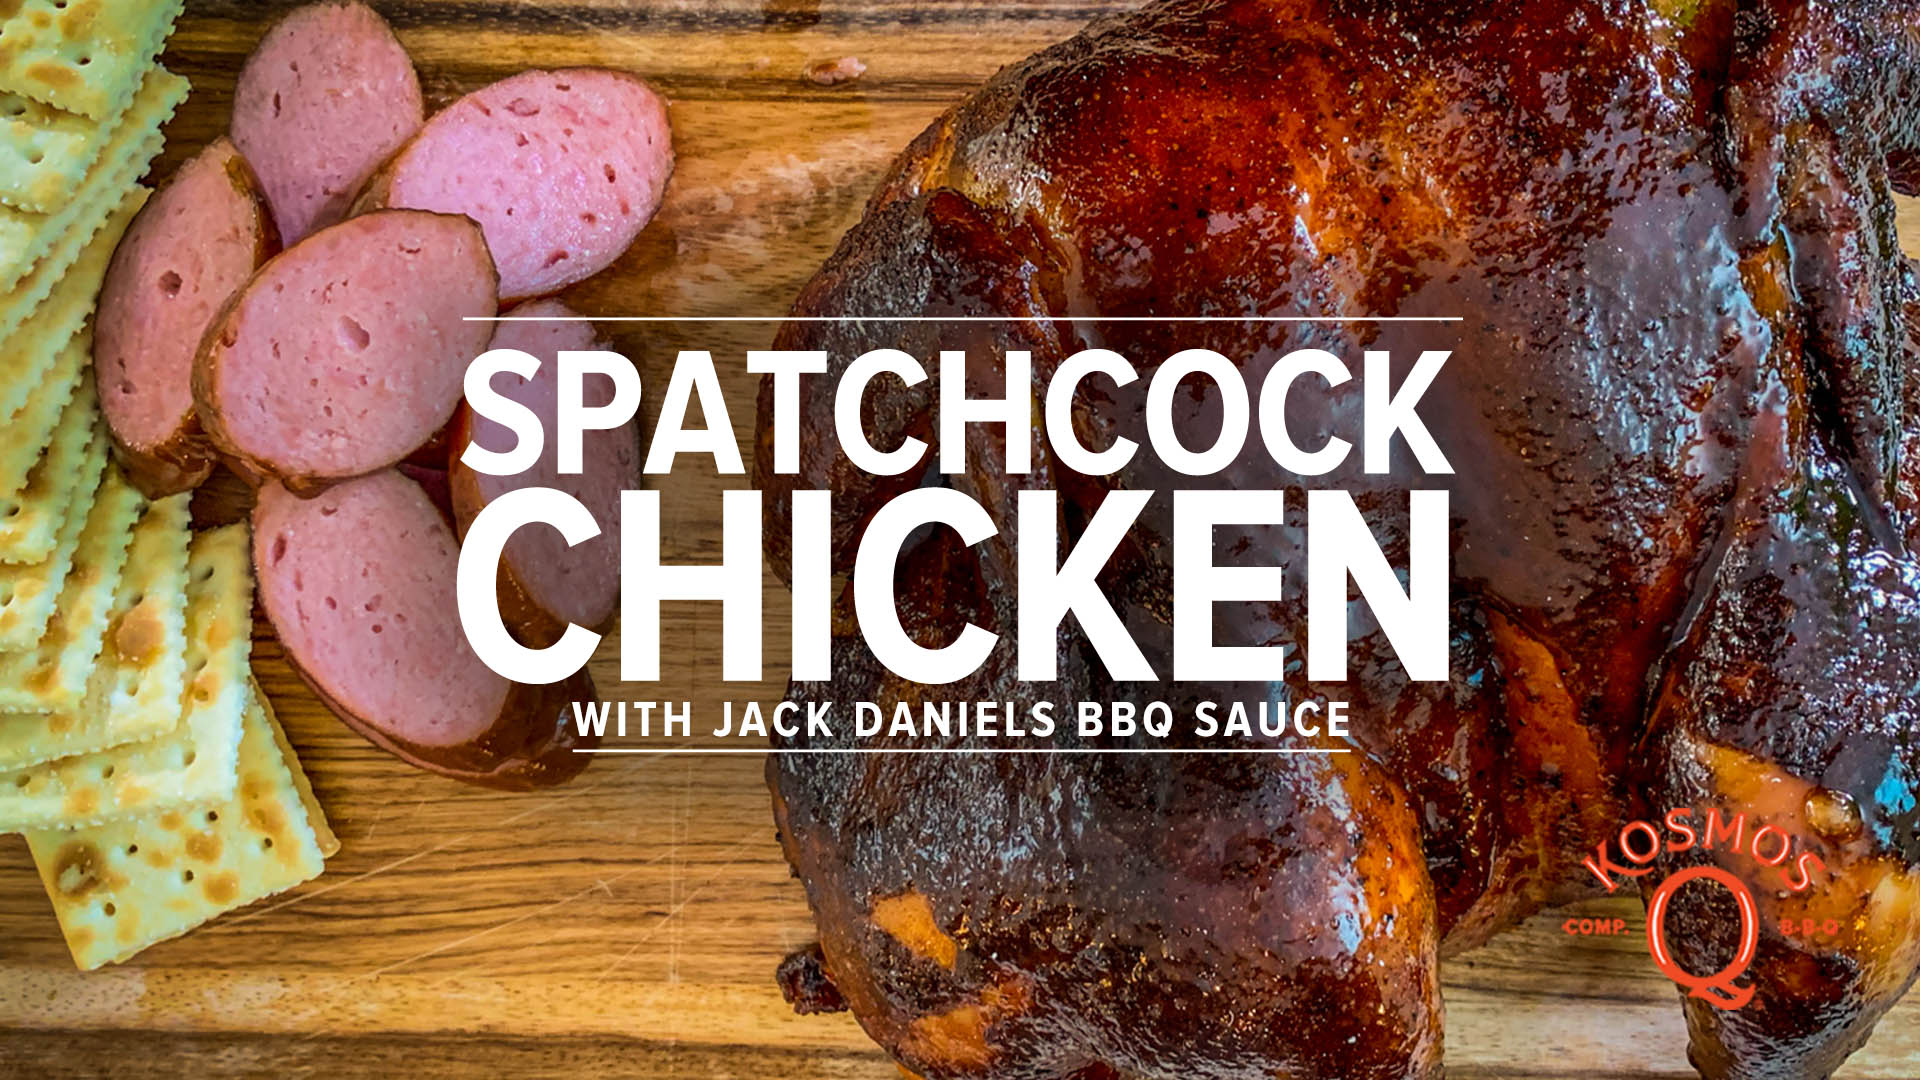 Spatchcock Chicken with Jack Daniels BBQ Sauce